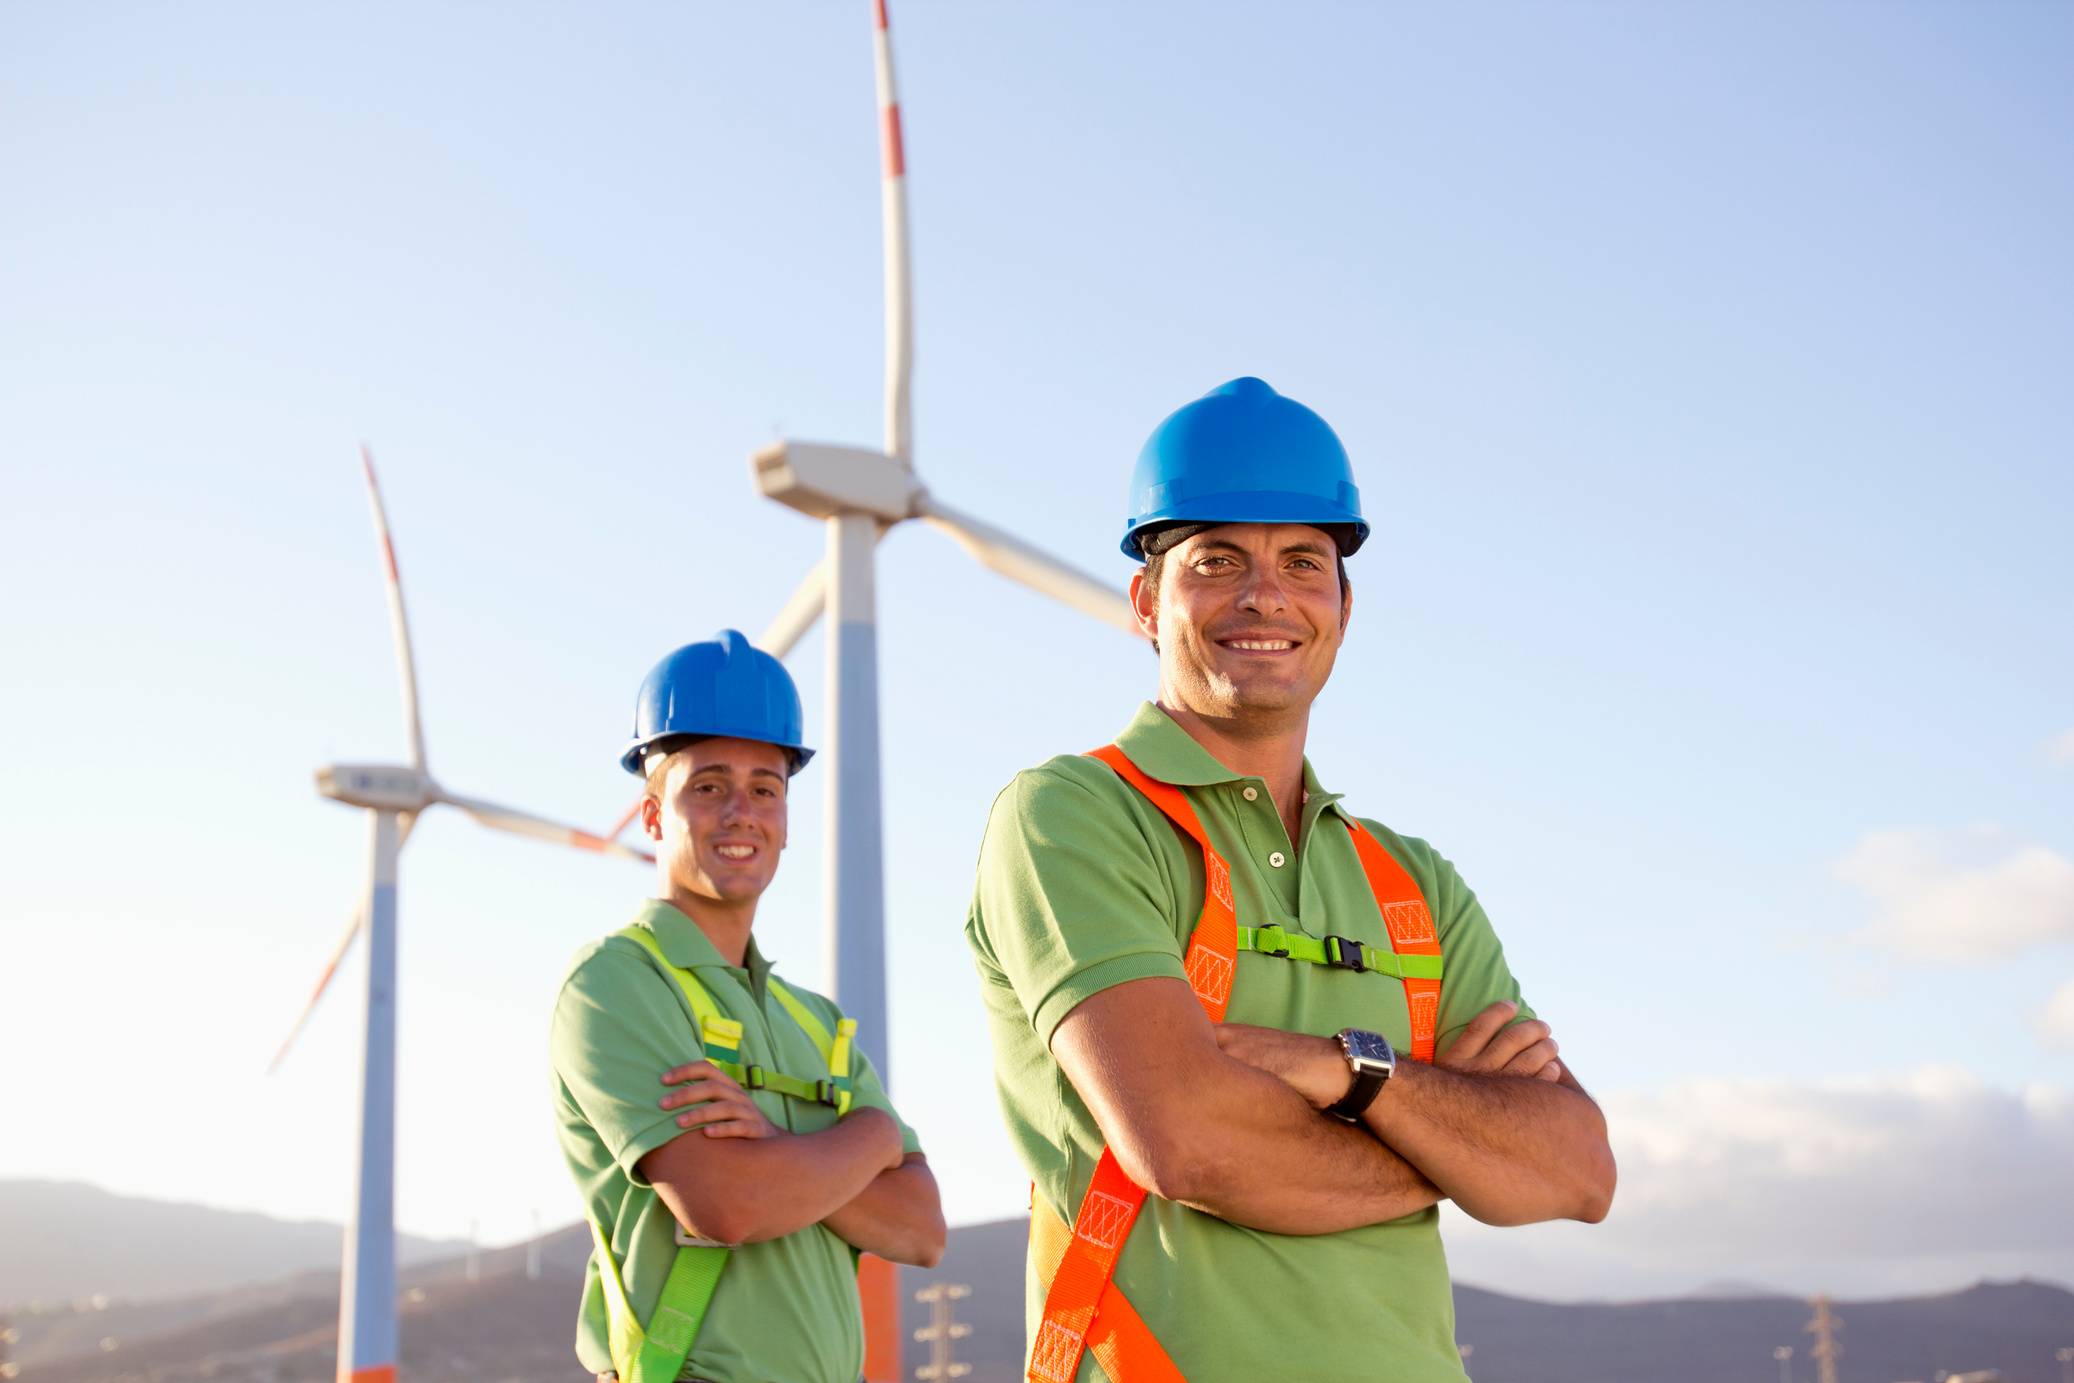 Renewable energy jobs